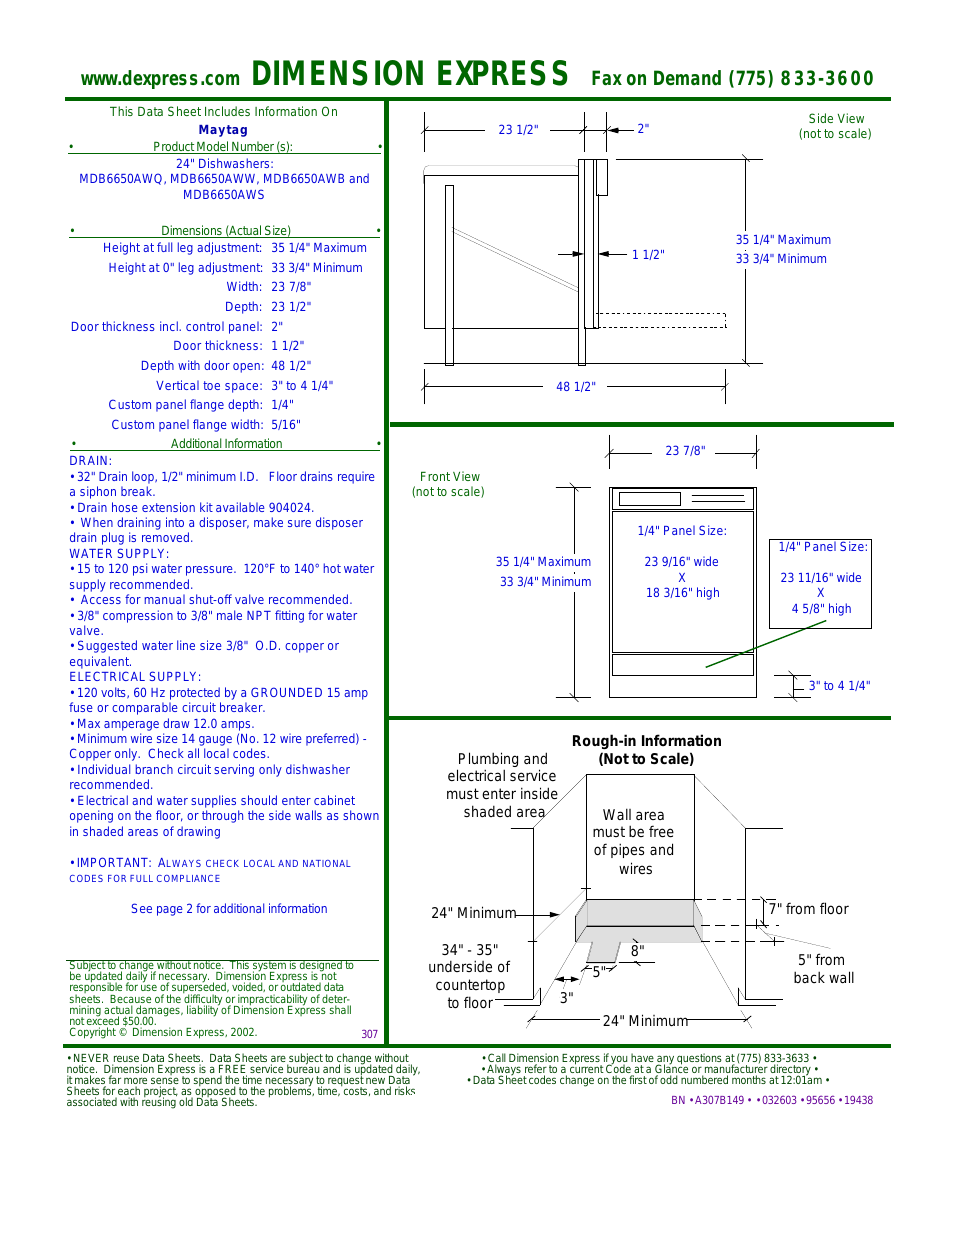 MDB6650AWW Dimension Guide